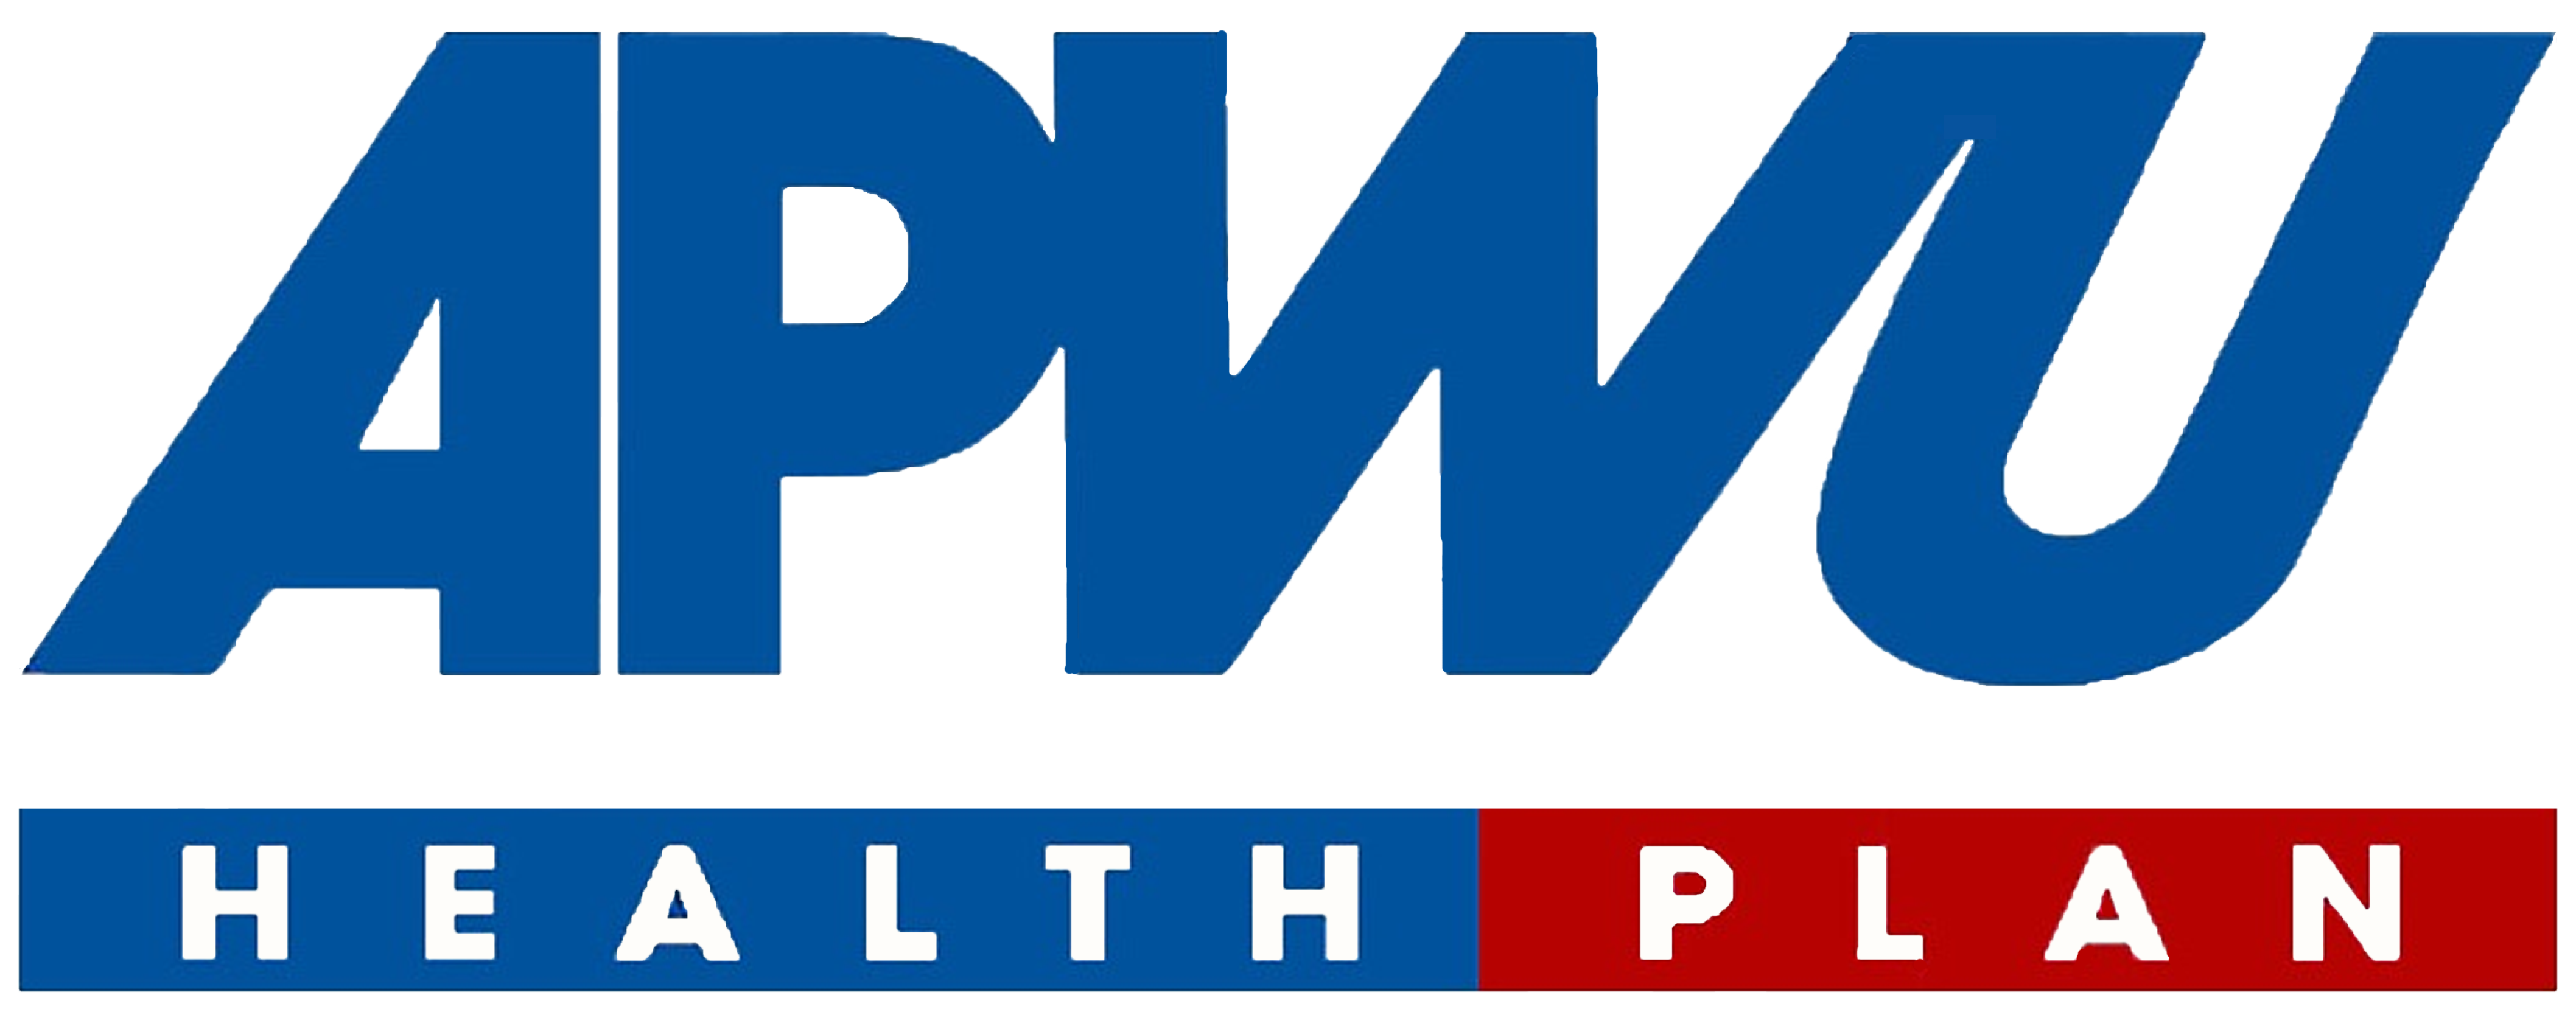 APWU Health Plan Logo High Resolution